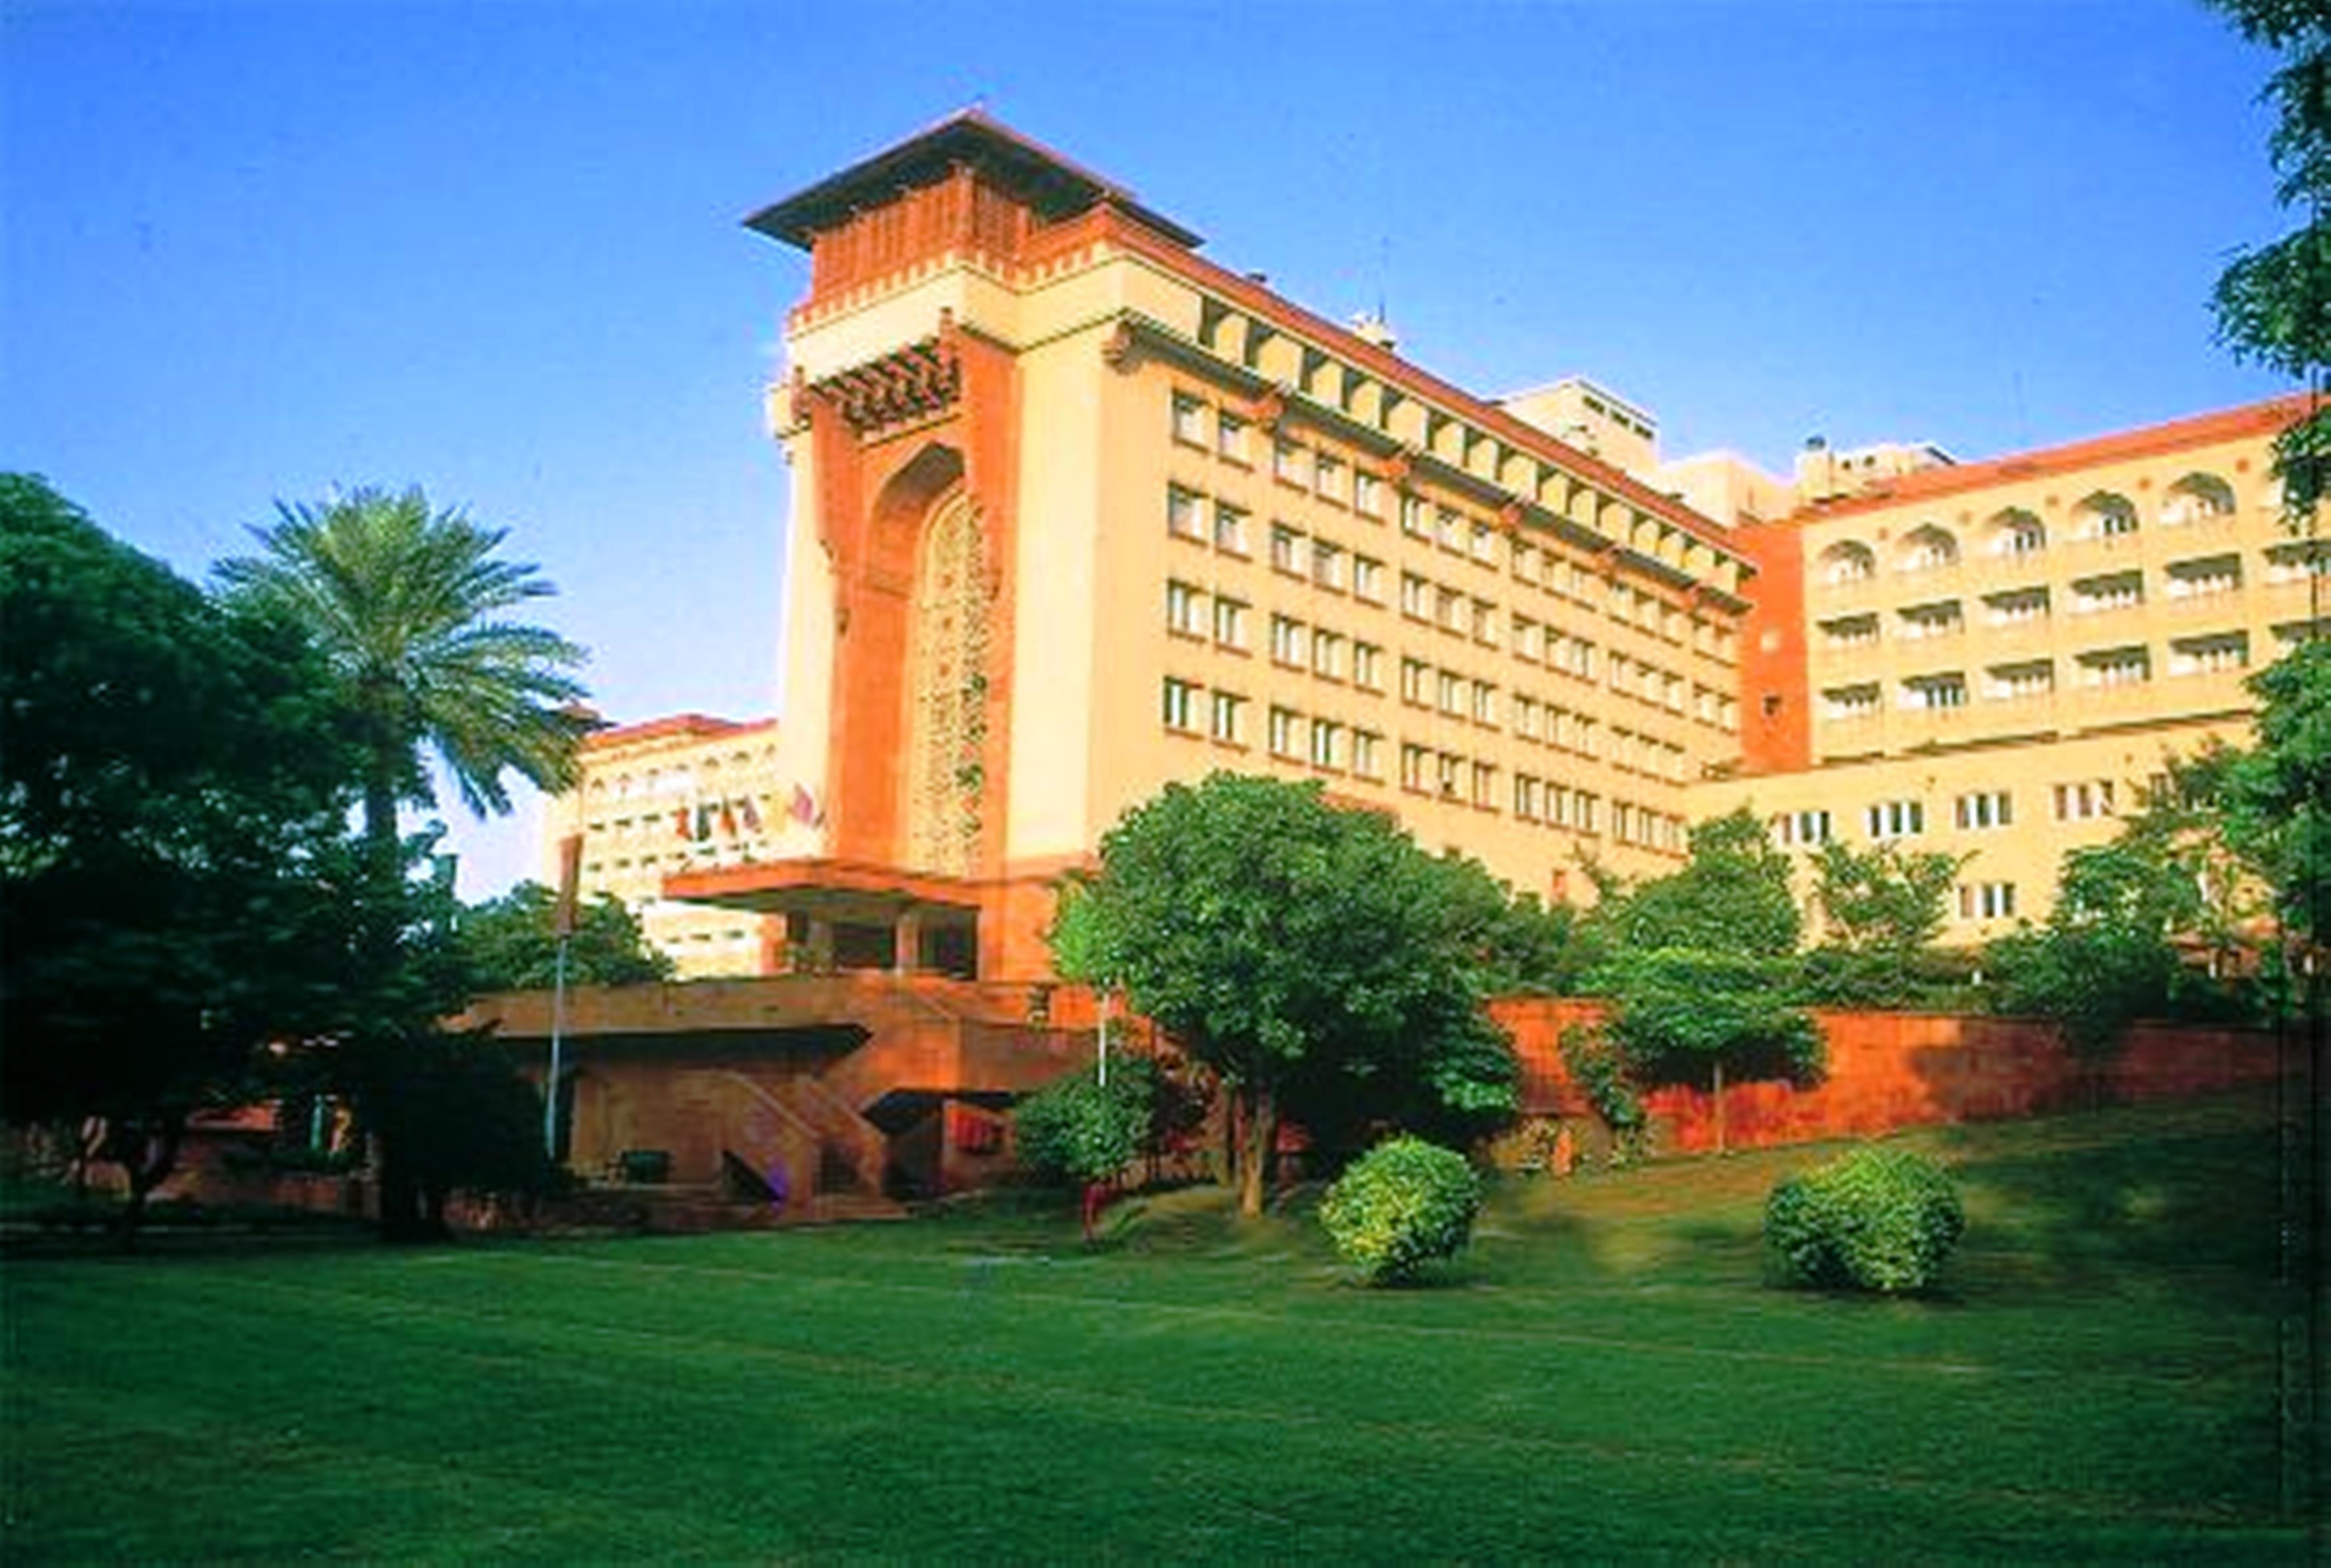 Hotel Southgate Delhi - A Luxury Hotel in Delhi, Best Hotel in South Delhi